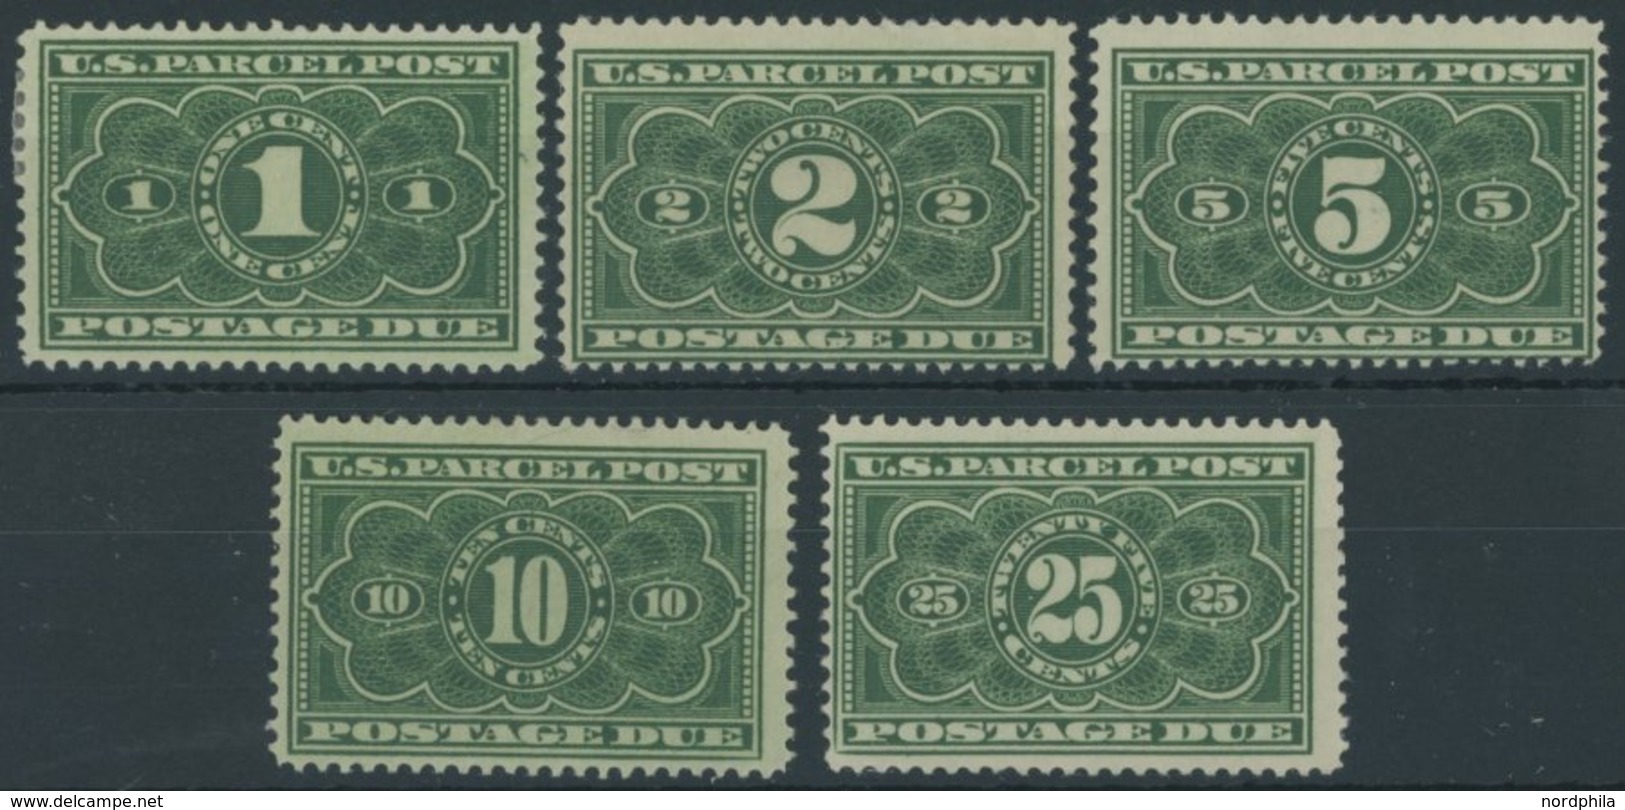 PAKET-PORTOMARKEN PP 1-5 **,* , Scott JQ 1-5, 1912, 1 - 25 C. U.S. Parcel Post Postage Due, Mi.Nr. 1 Und 4 Falzrest, Son - Parcel Post & Special Handling